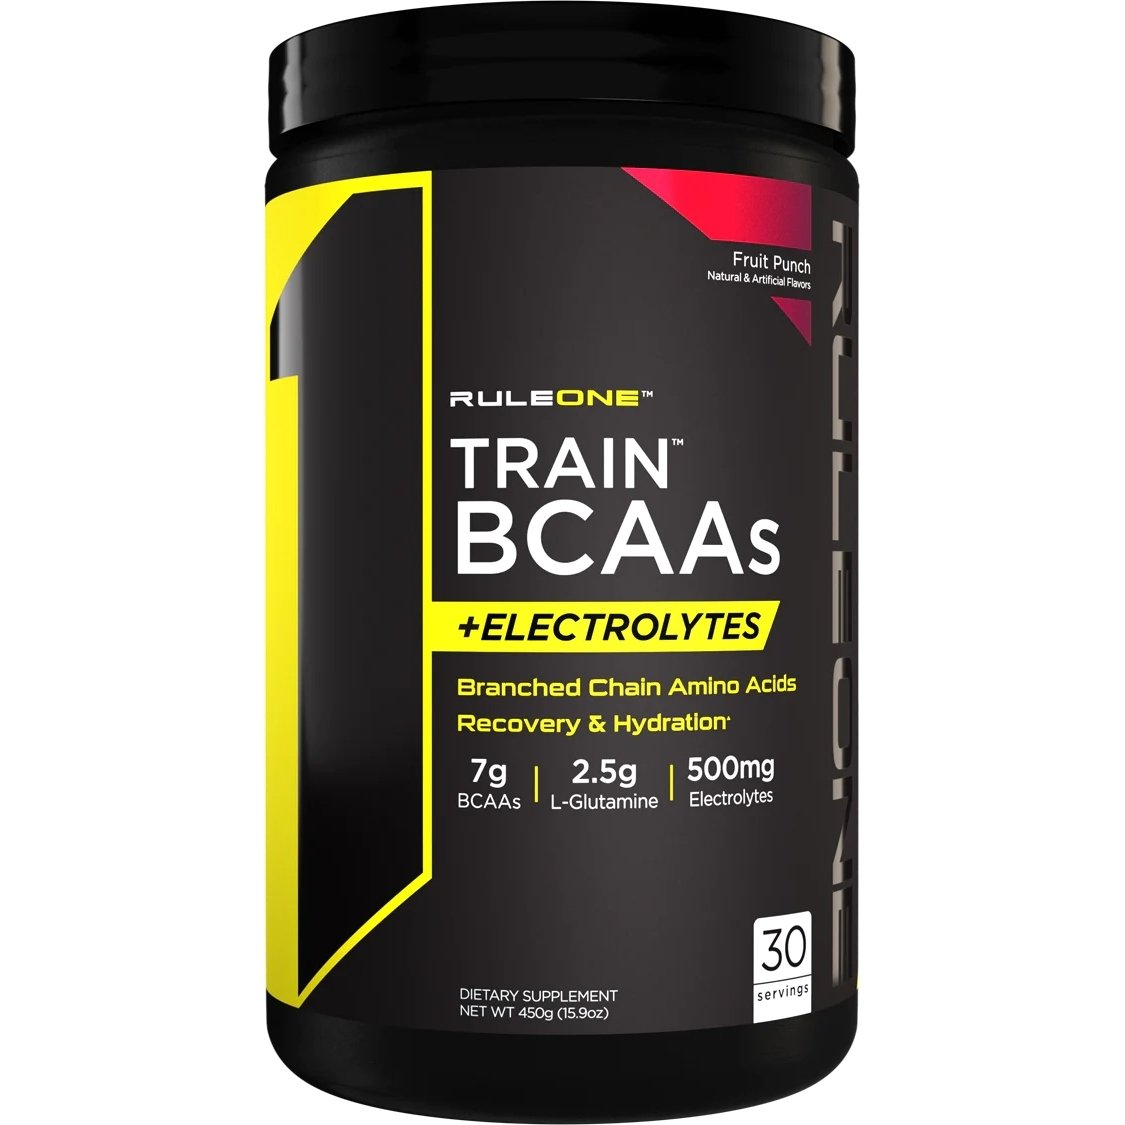 Аминокислота BCAA Rule 1 Train BCAAs + Electrolytes, 450 грамм Фруктовый пунш,  ml, Rule One Proteins. BCAA. Weight Loss स्वास्थ्य लाभ Anti-catabolic properties Lean muscle mass 